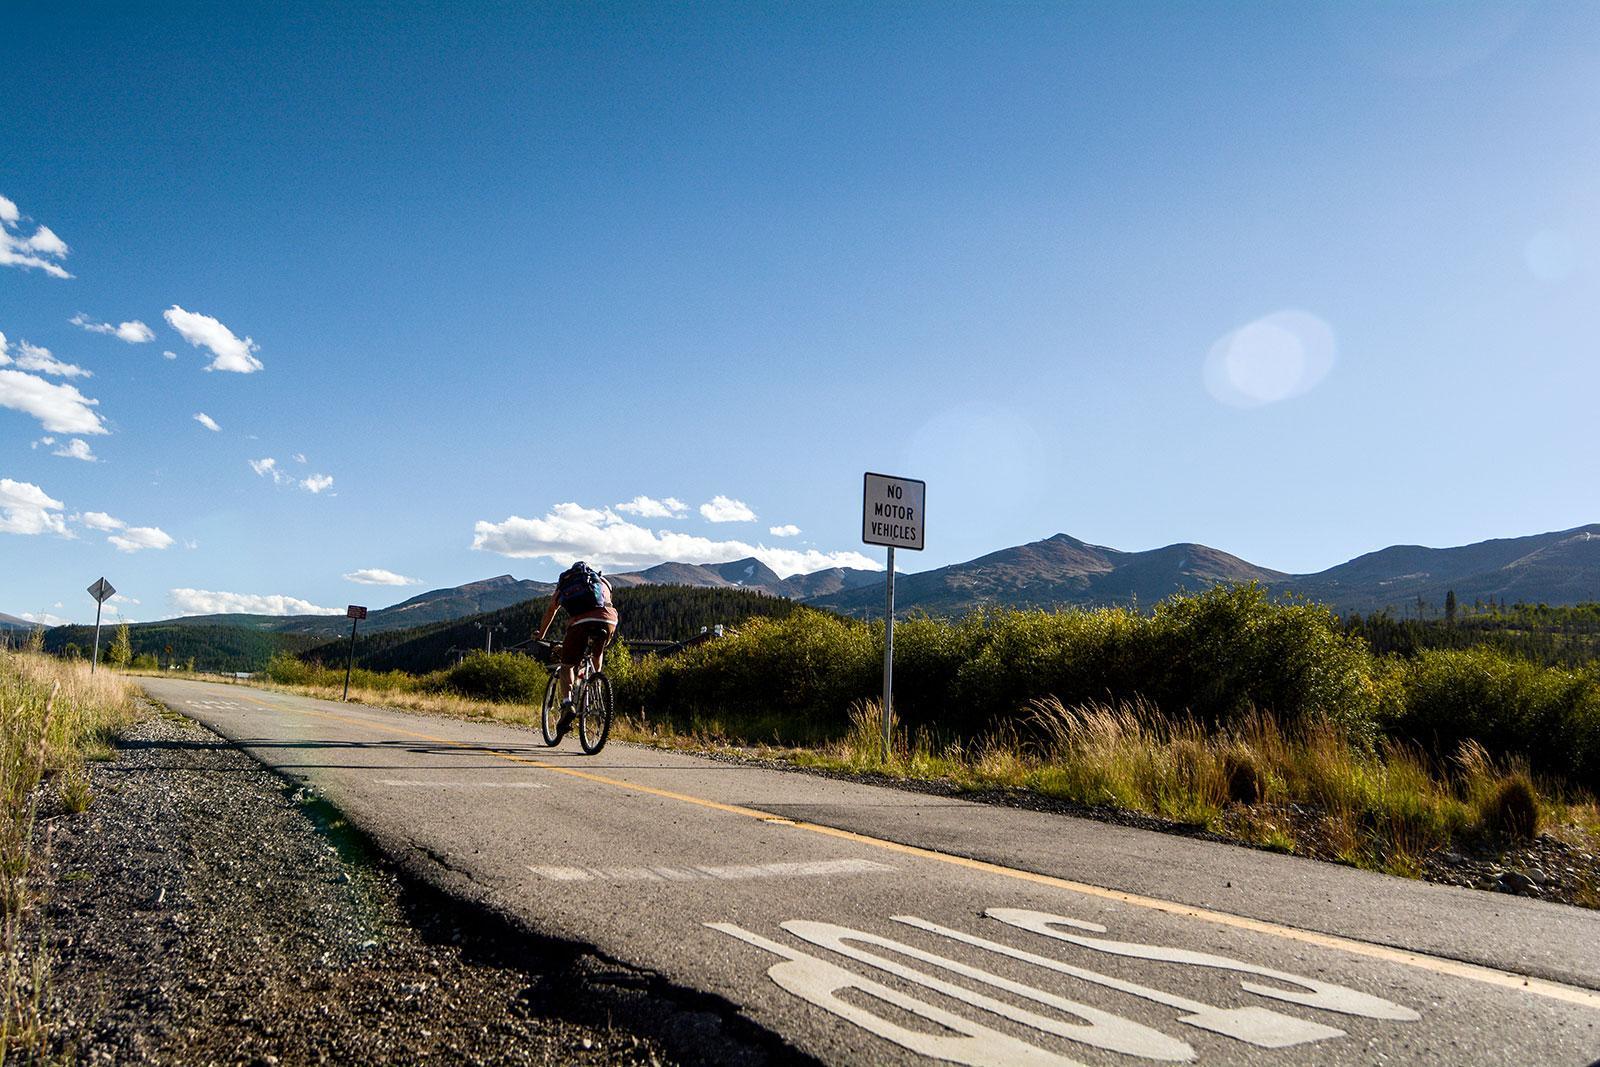 biking on the bike path in Summit County, Colorado